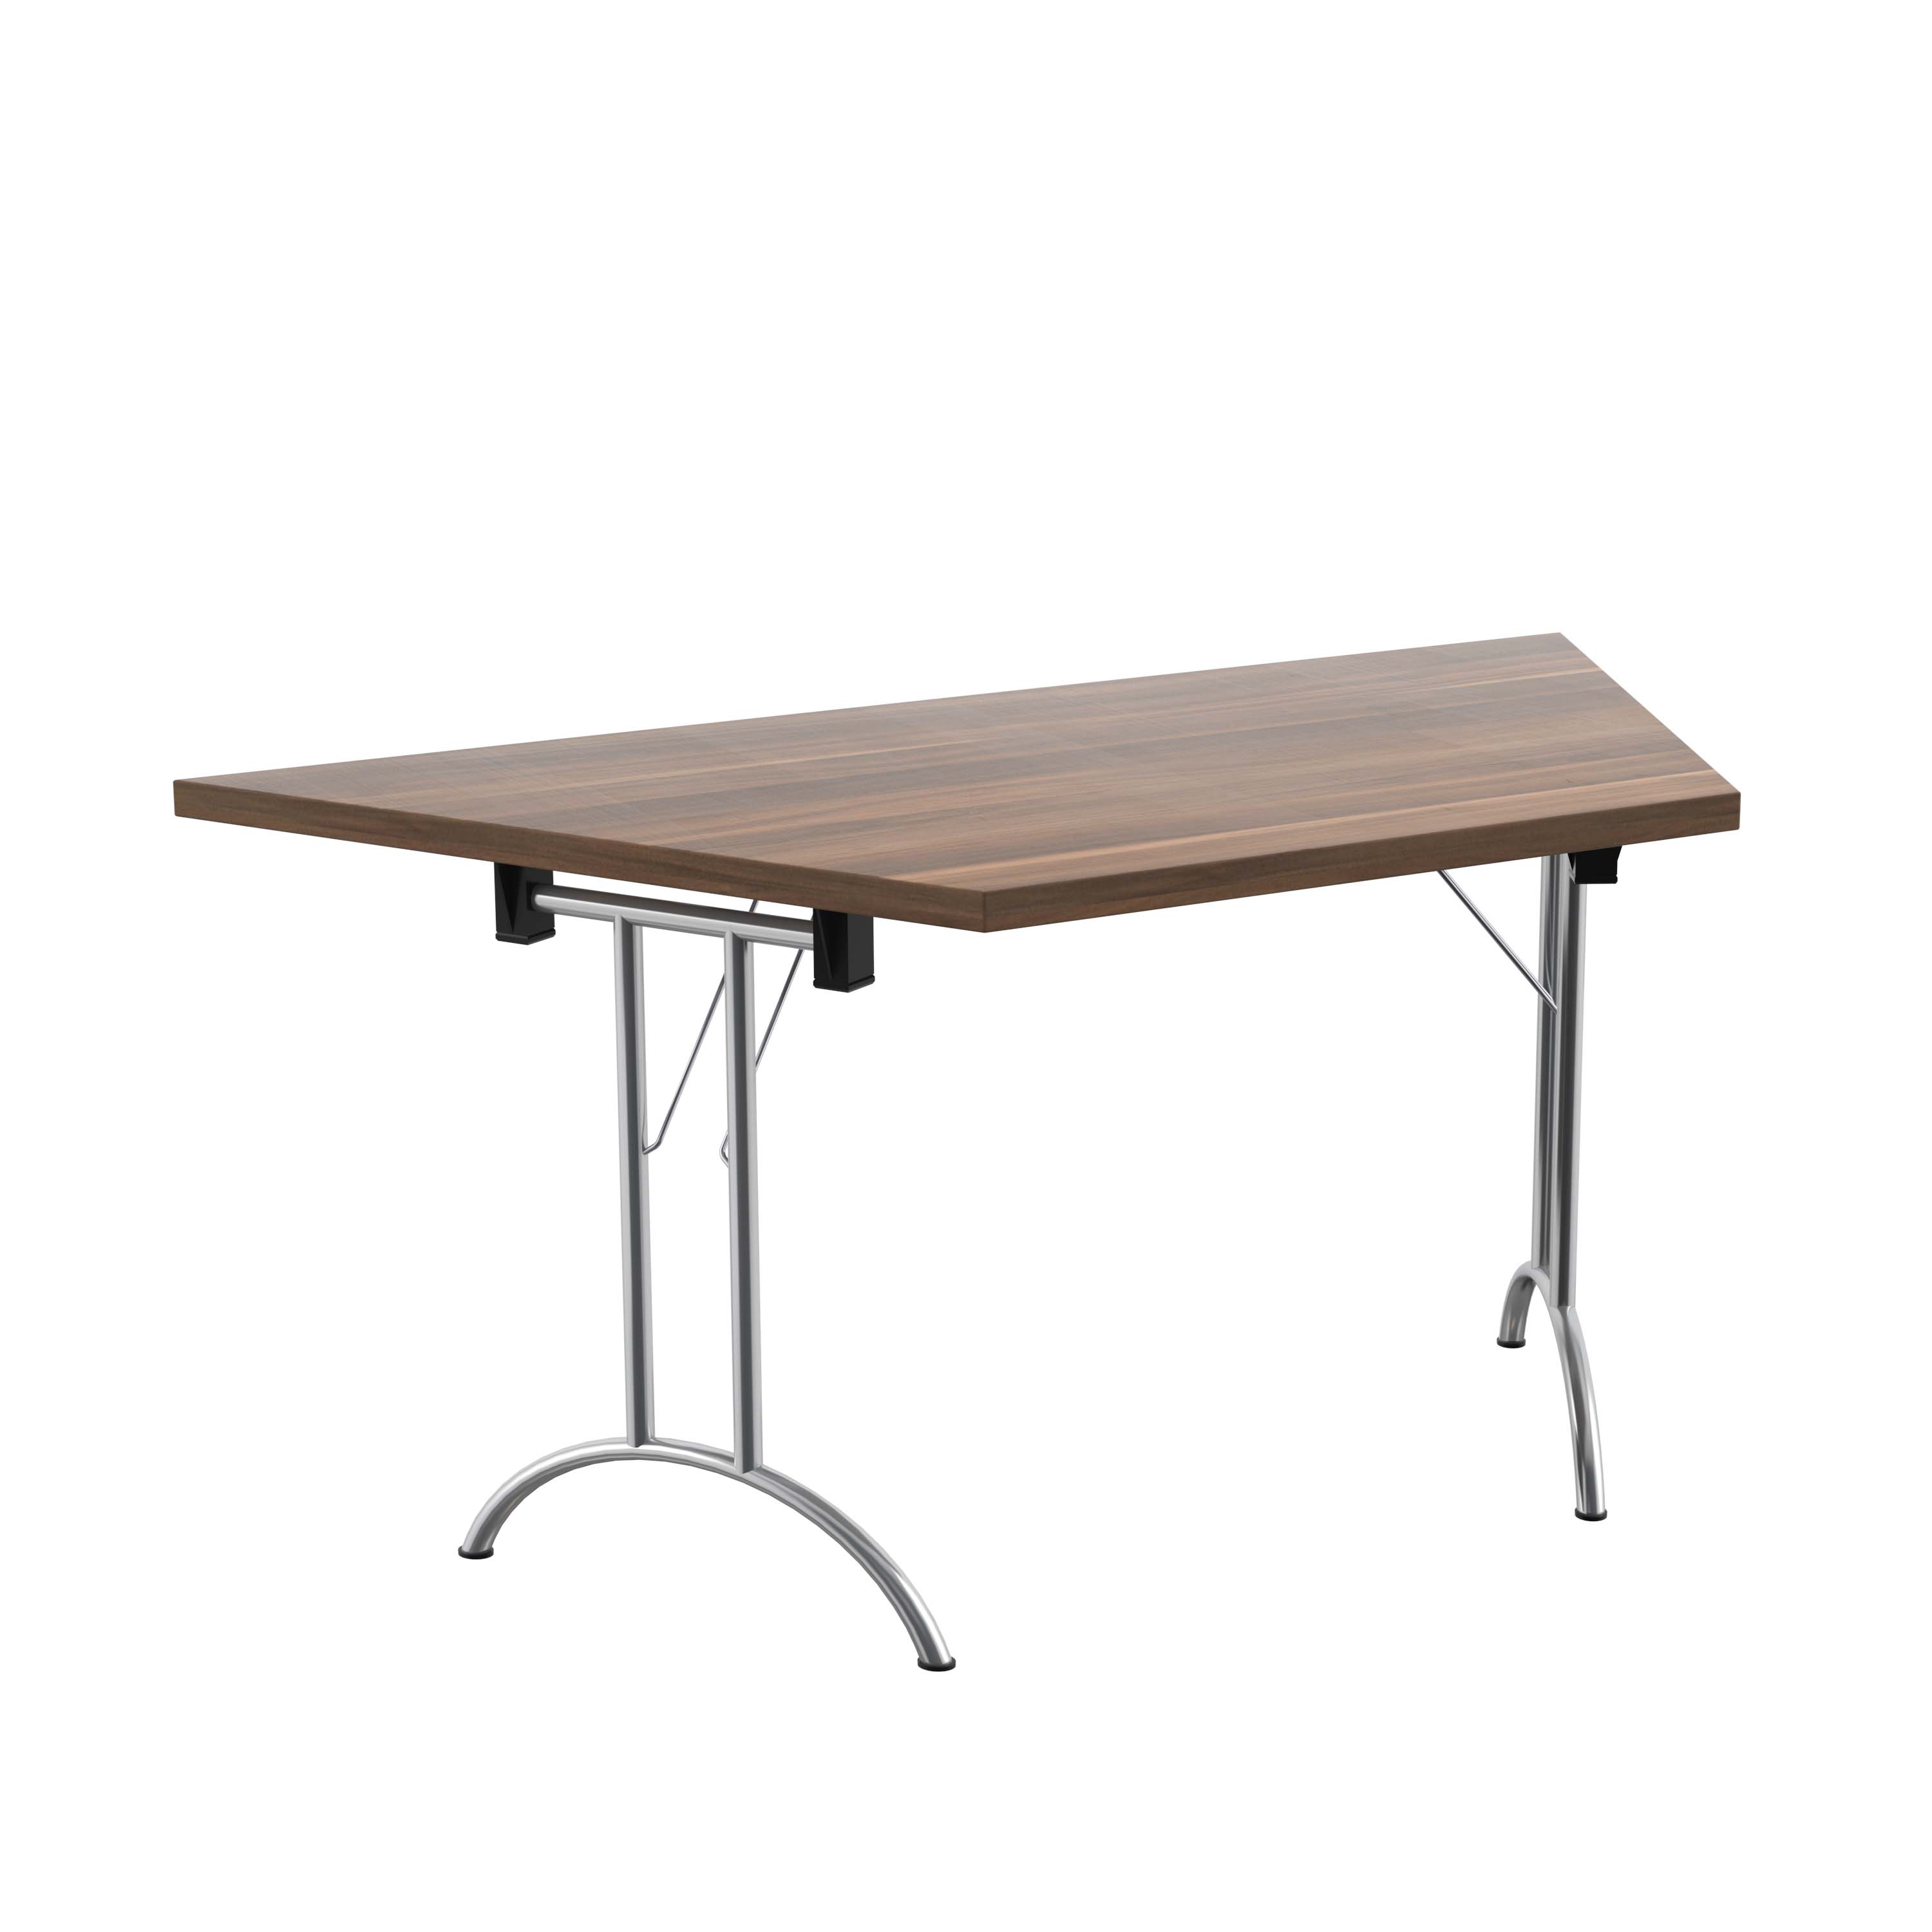 Union Folding Table Trapezoidal Top